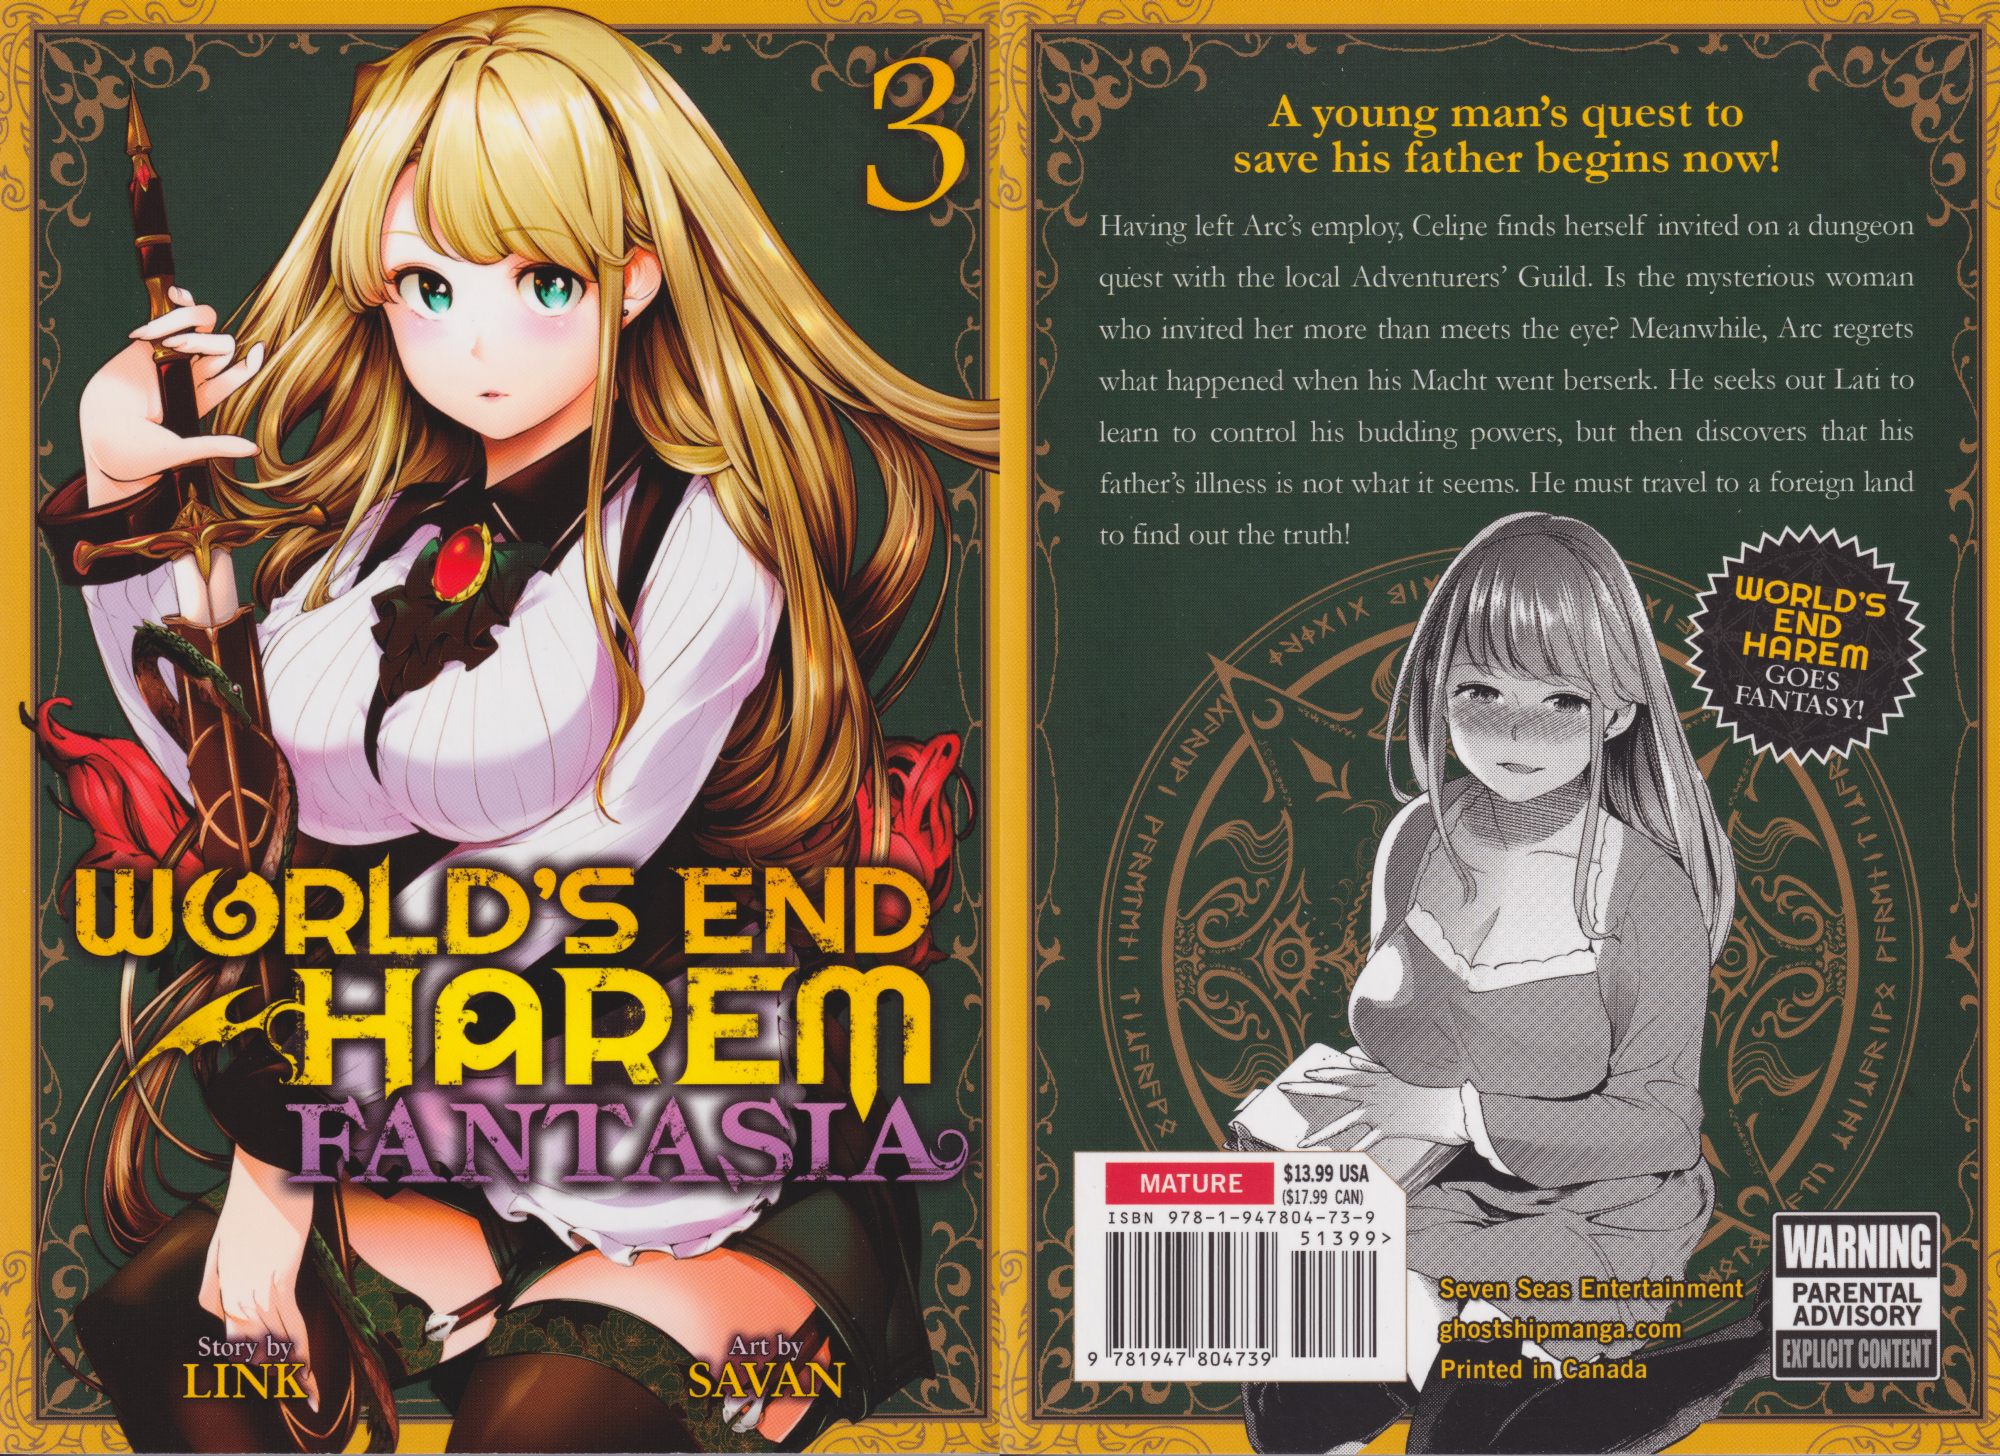 World's End Harem: FANTASIA Manga Review/Manga First Impressions